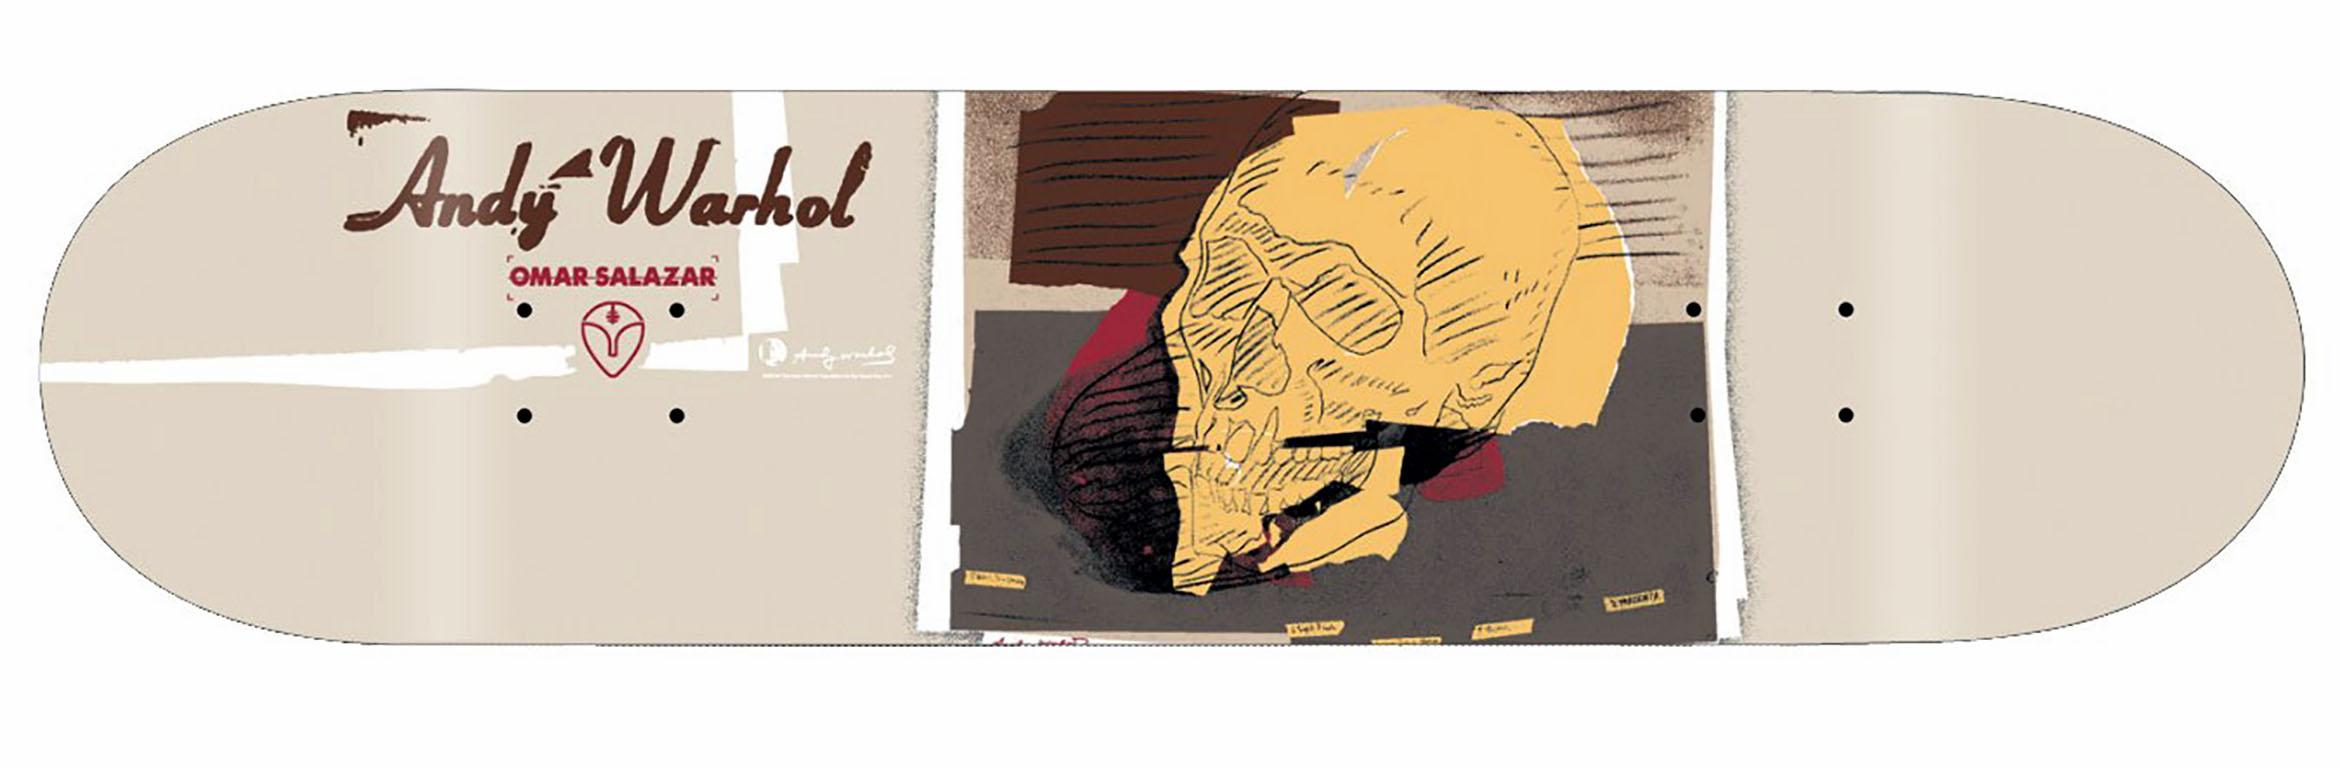 Andy Warhol Skull Skateboard Deck (Warhol skulls)  - Print by (after) Andy Warhol